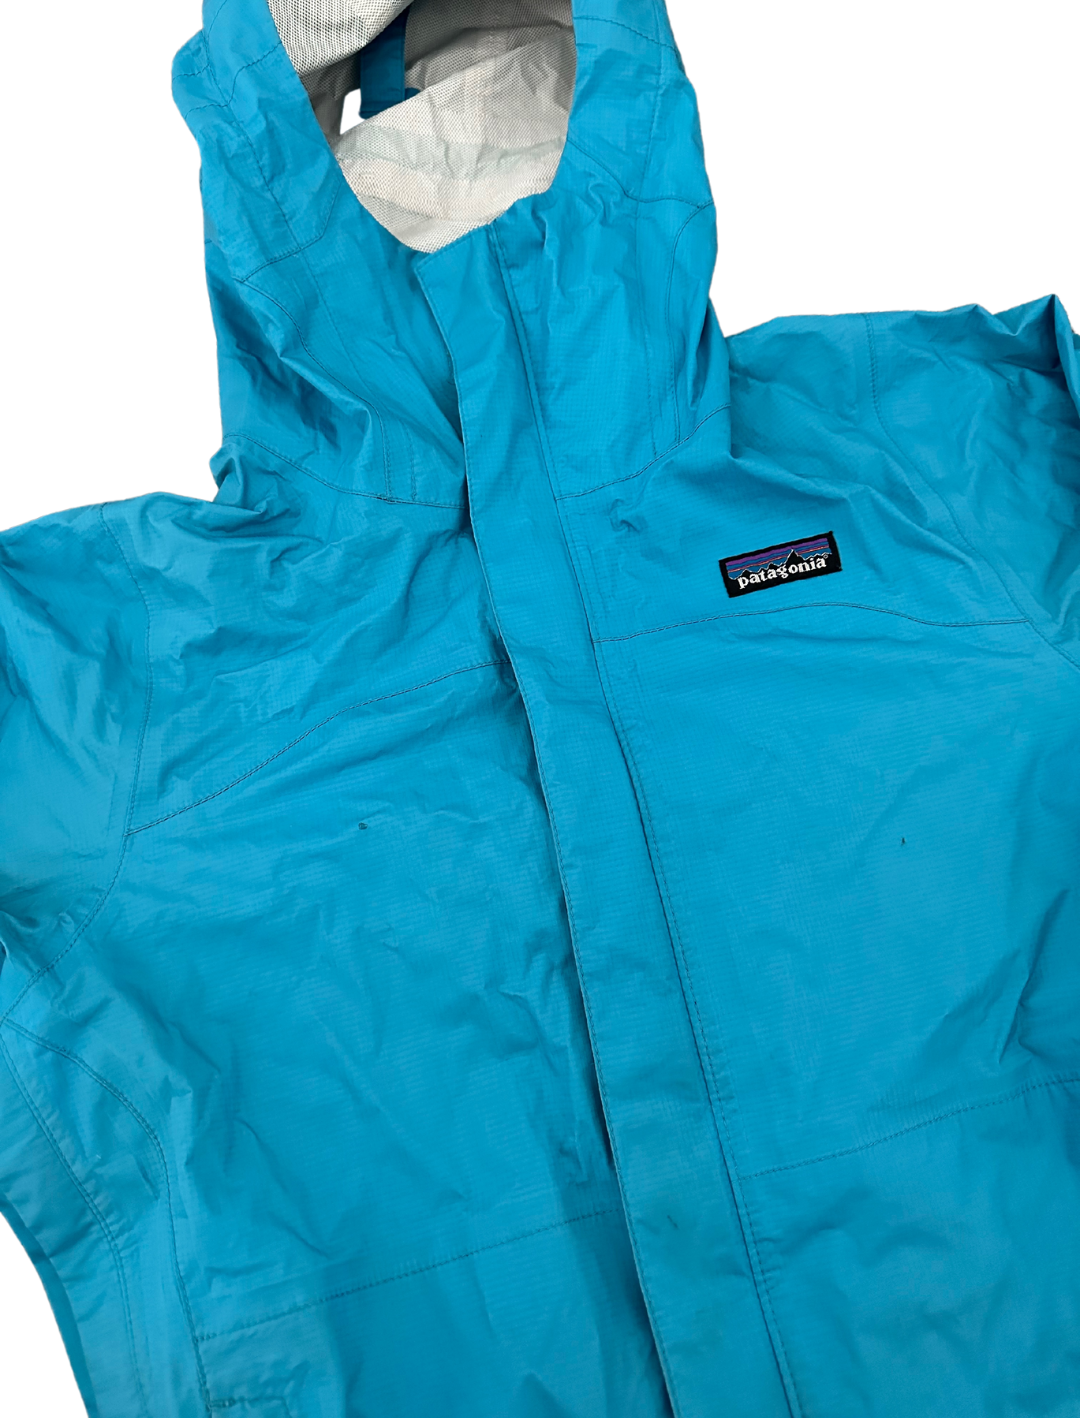 Used Patagonia Rain Jacket Size XS